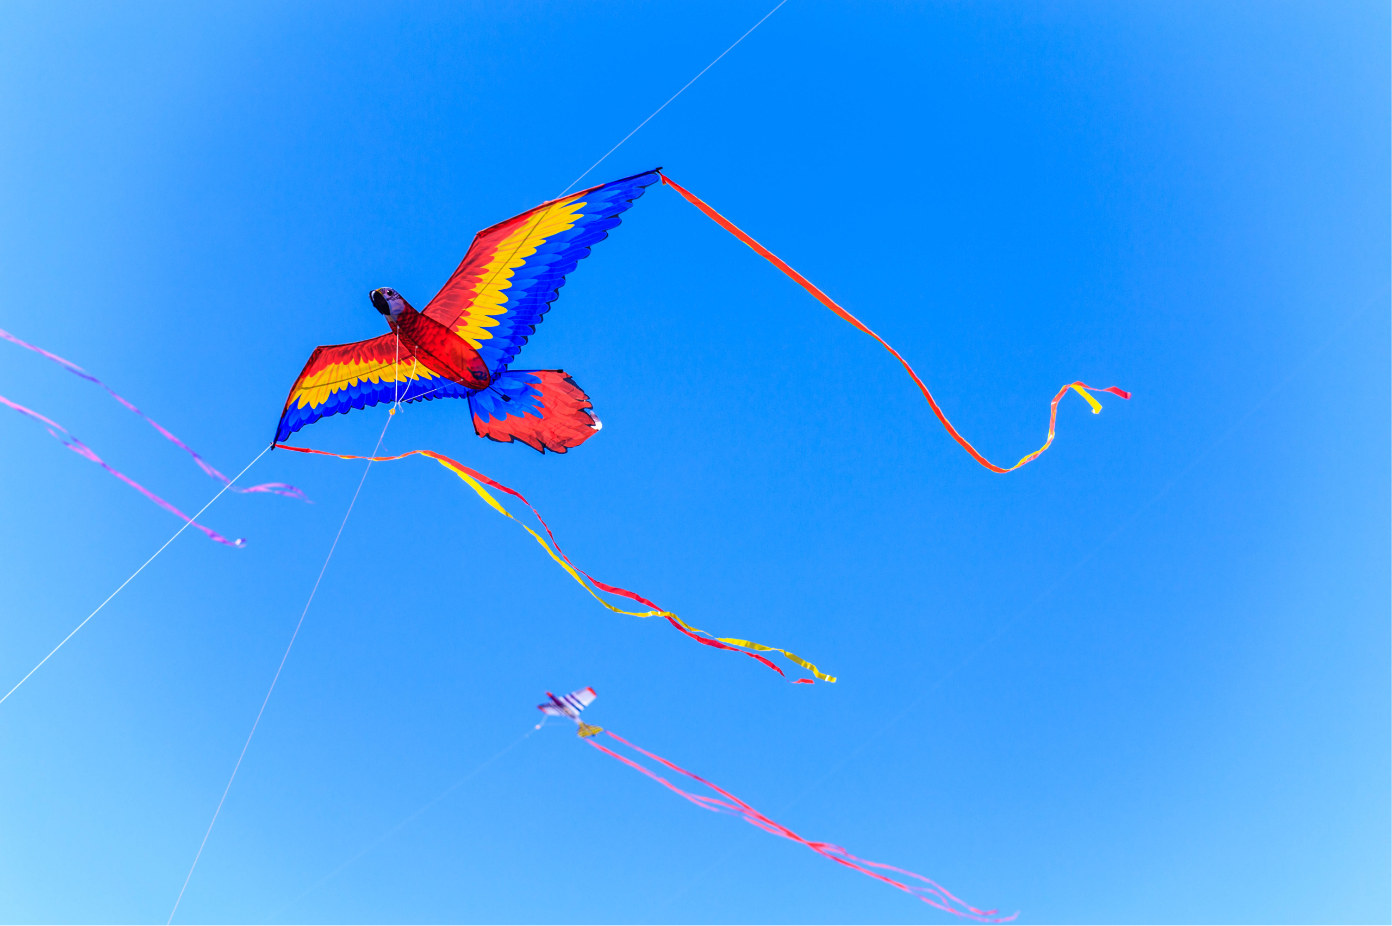 Multi-colored kite against blue sky.